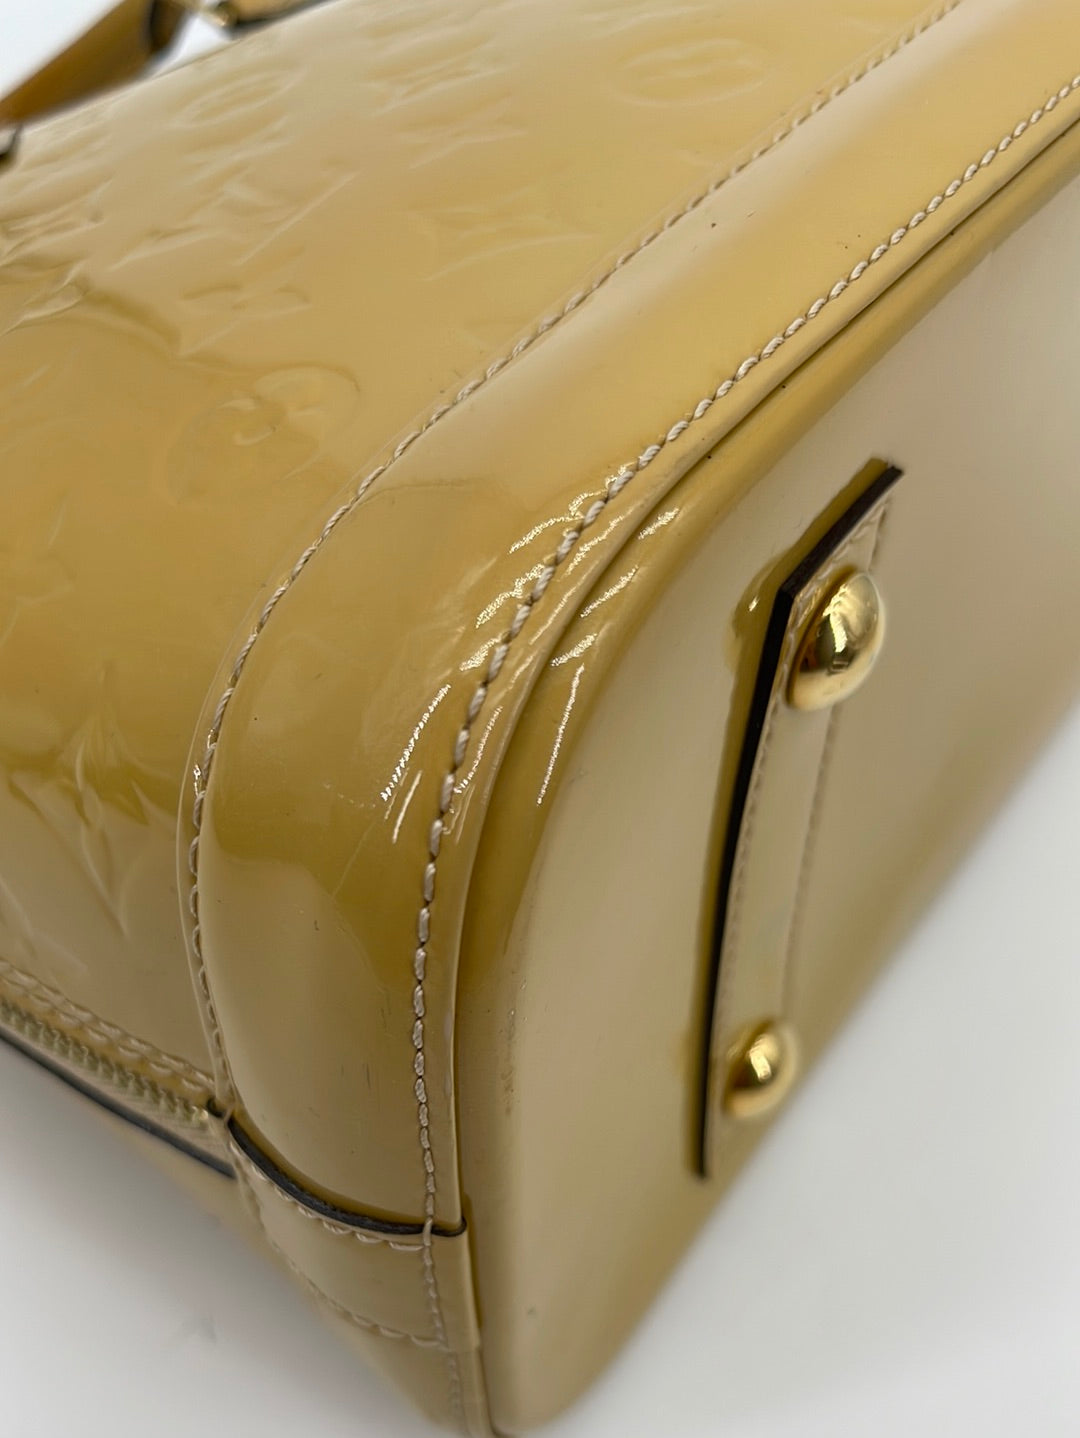 Louis Vuitton Yellow Monogram Vernis Alma PM Top Handle Bag Louis